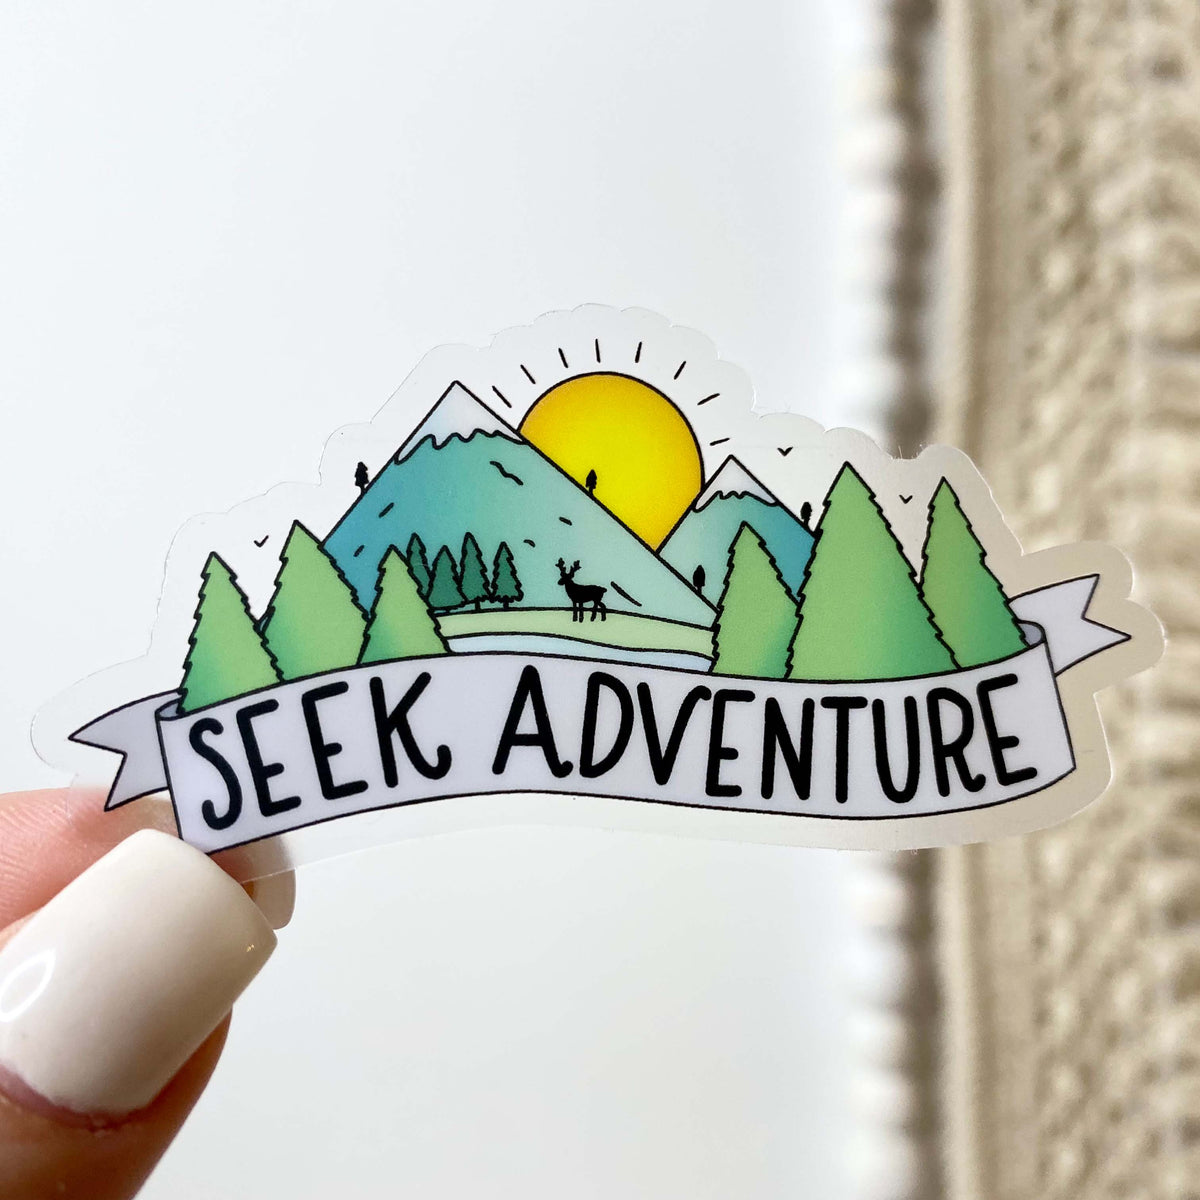 Seek Adventure Outdoors Clear Sticker